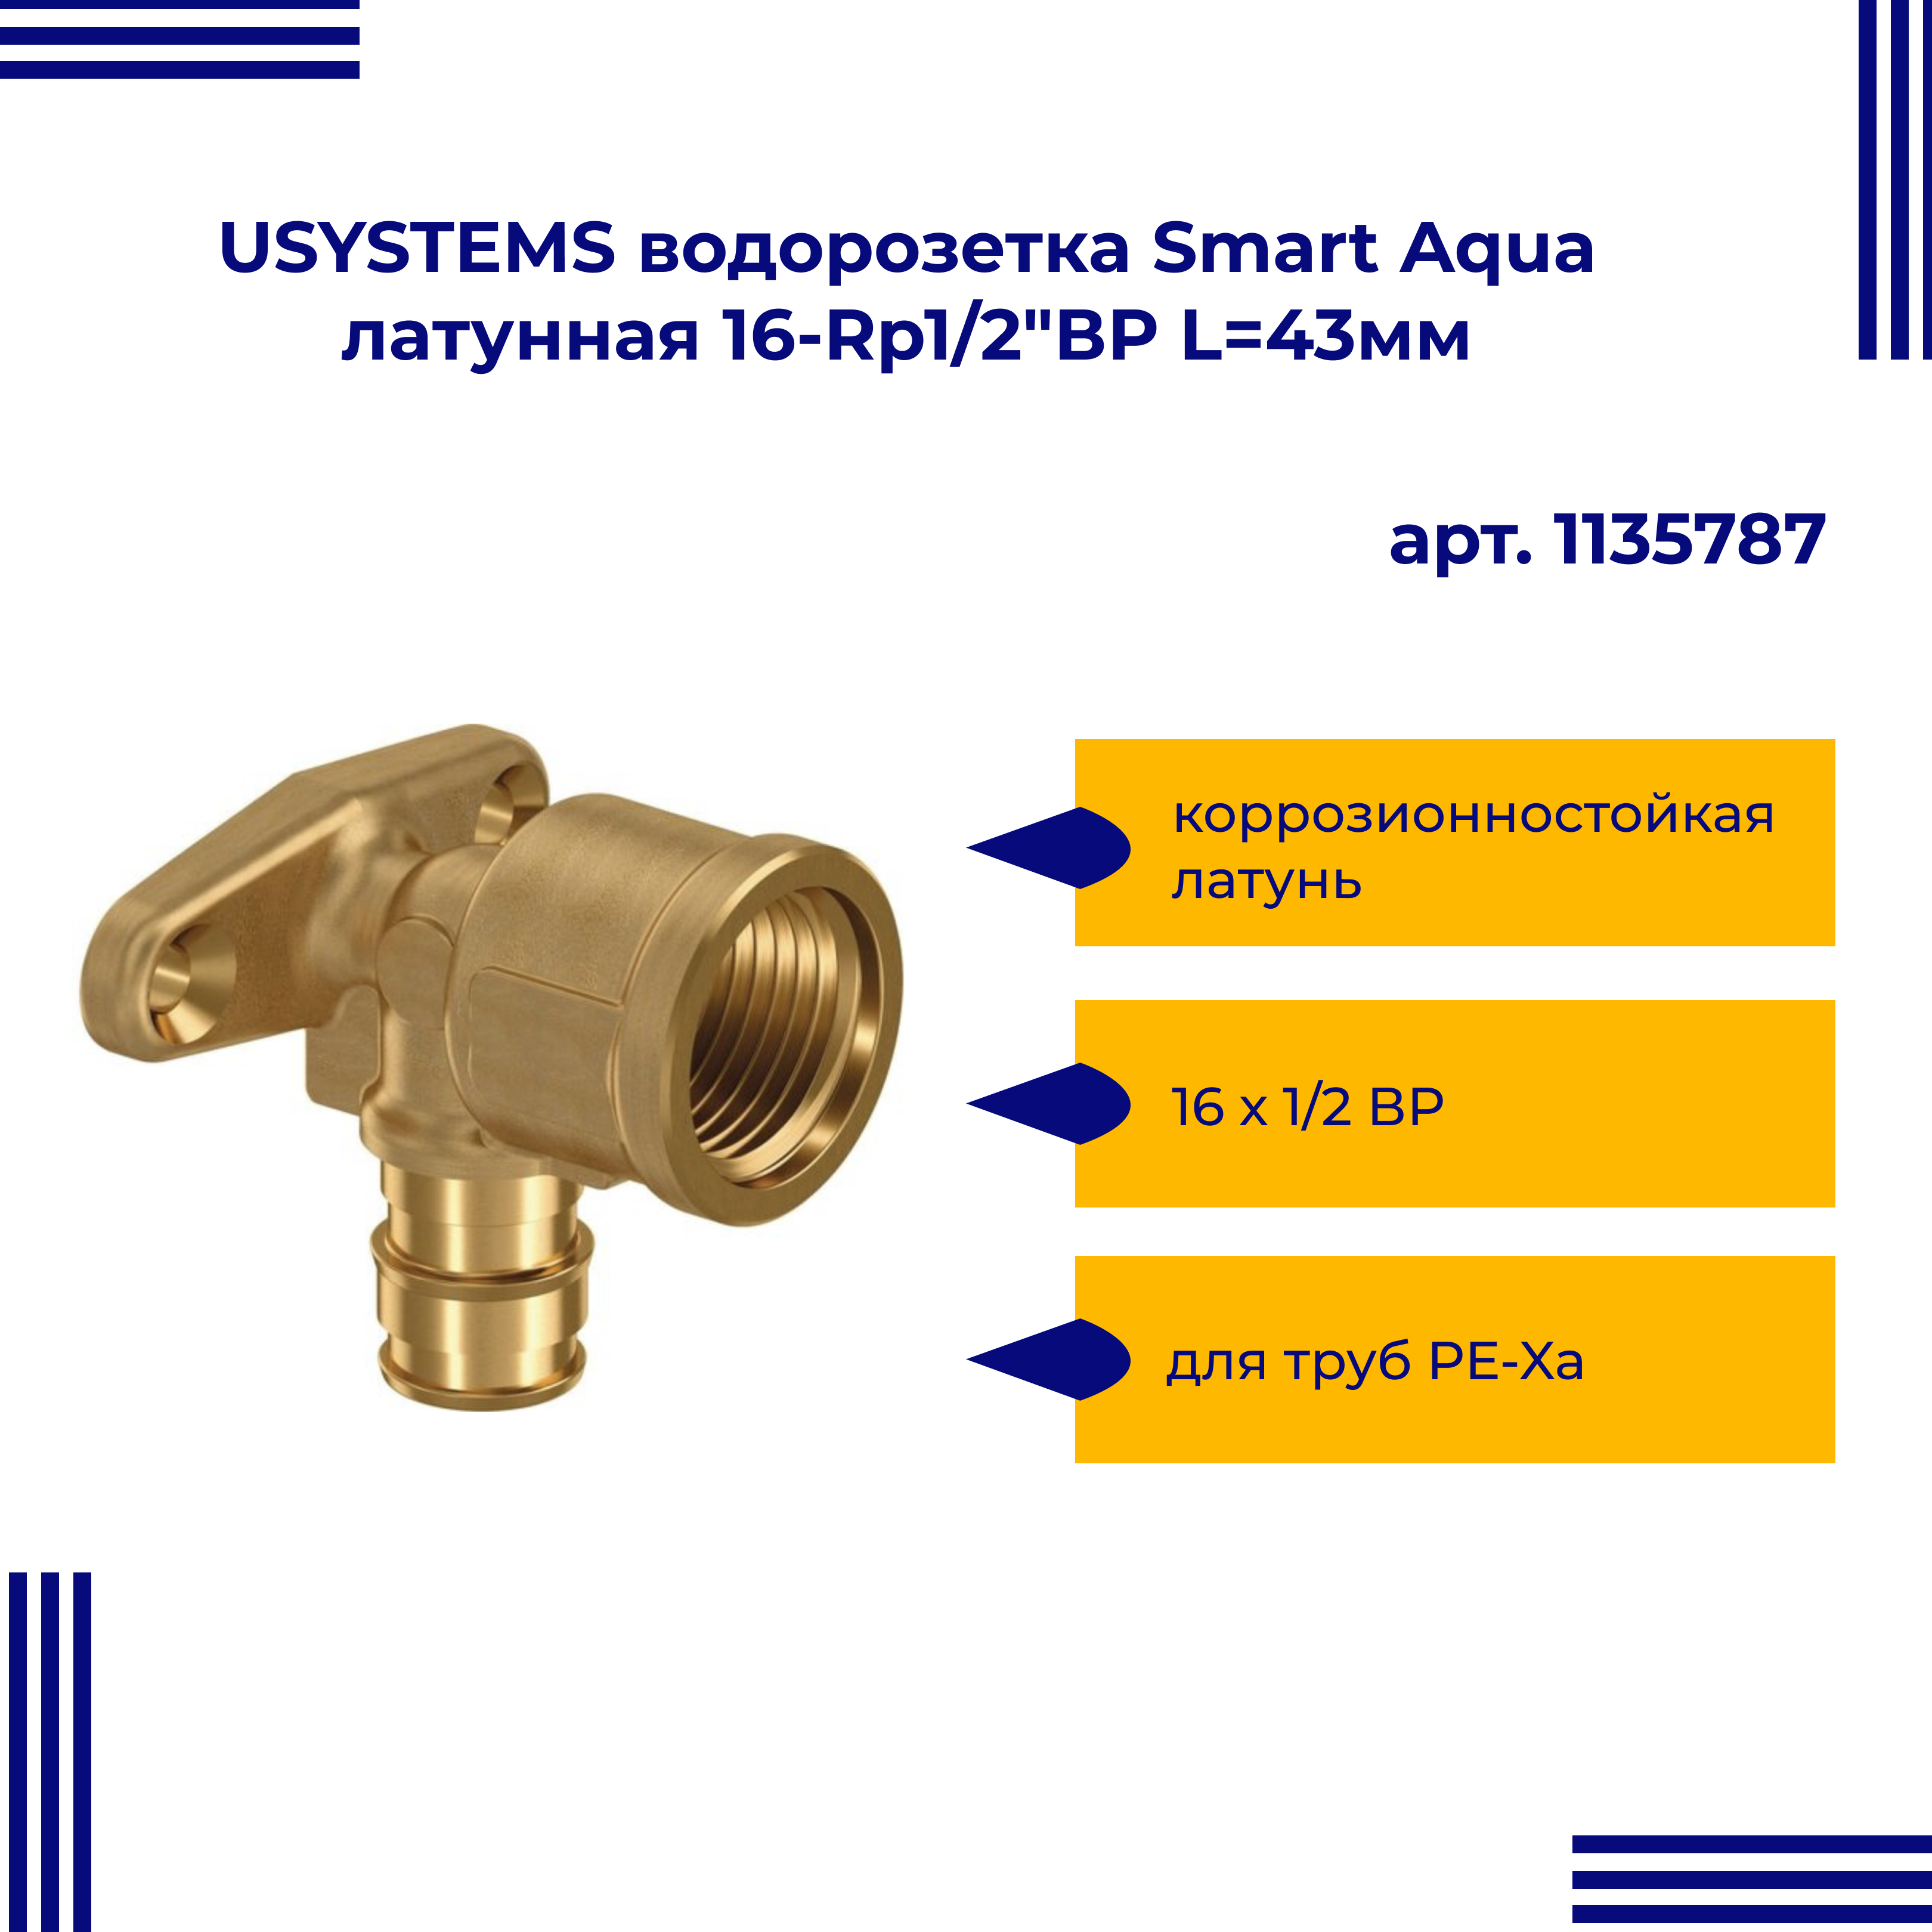 водорозетка usystems smart aqua 16 rp 1 2 вр l 43мм латунь для труб pe xa тип 1 уп 5 шт Водорозетка USYSTEMS Smart Aqua 16-Rp1/2